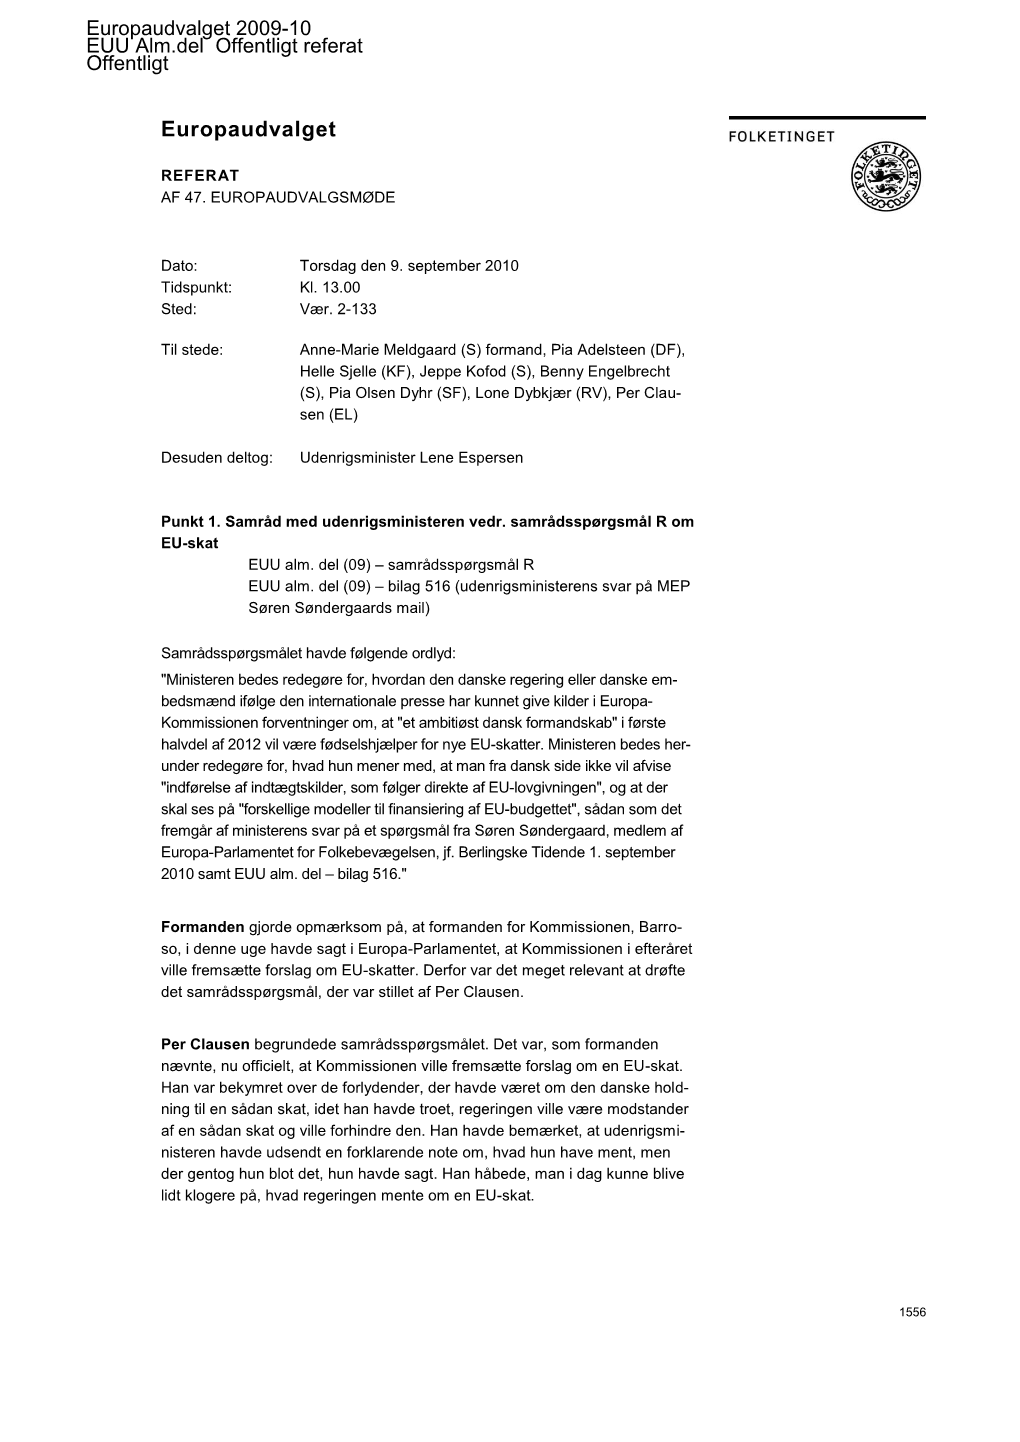 EUU Alm.Del Offentligt Referat : EUU Udvalgsmødereferat M 47, 9-9